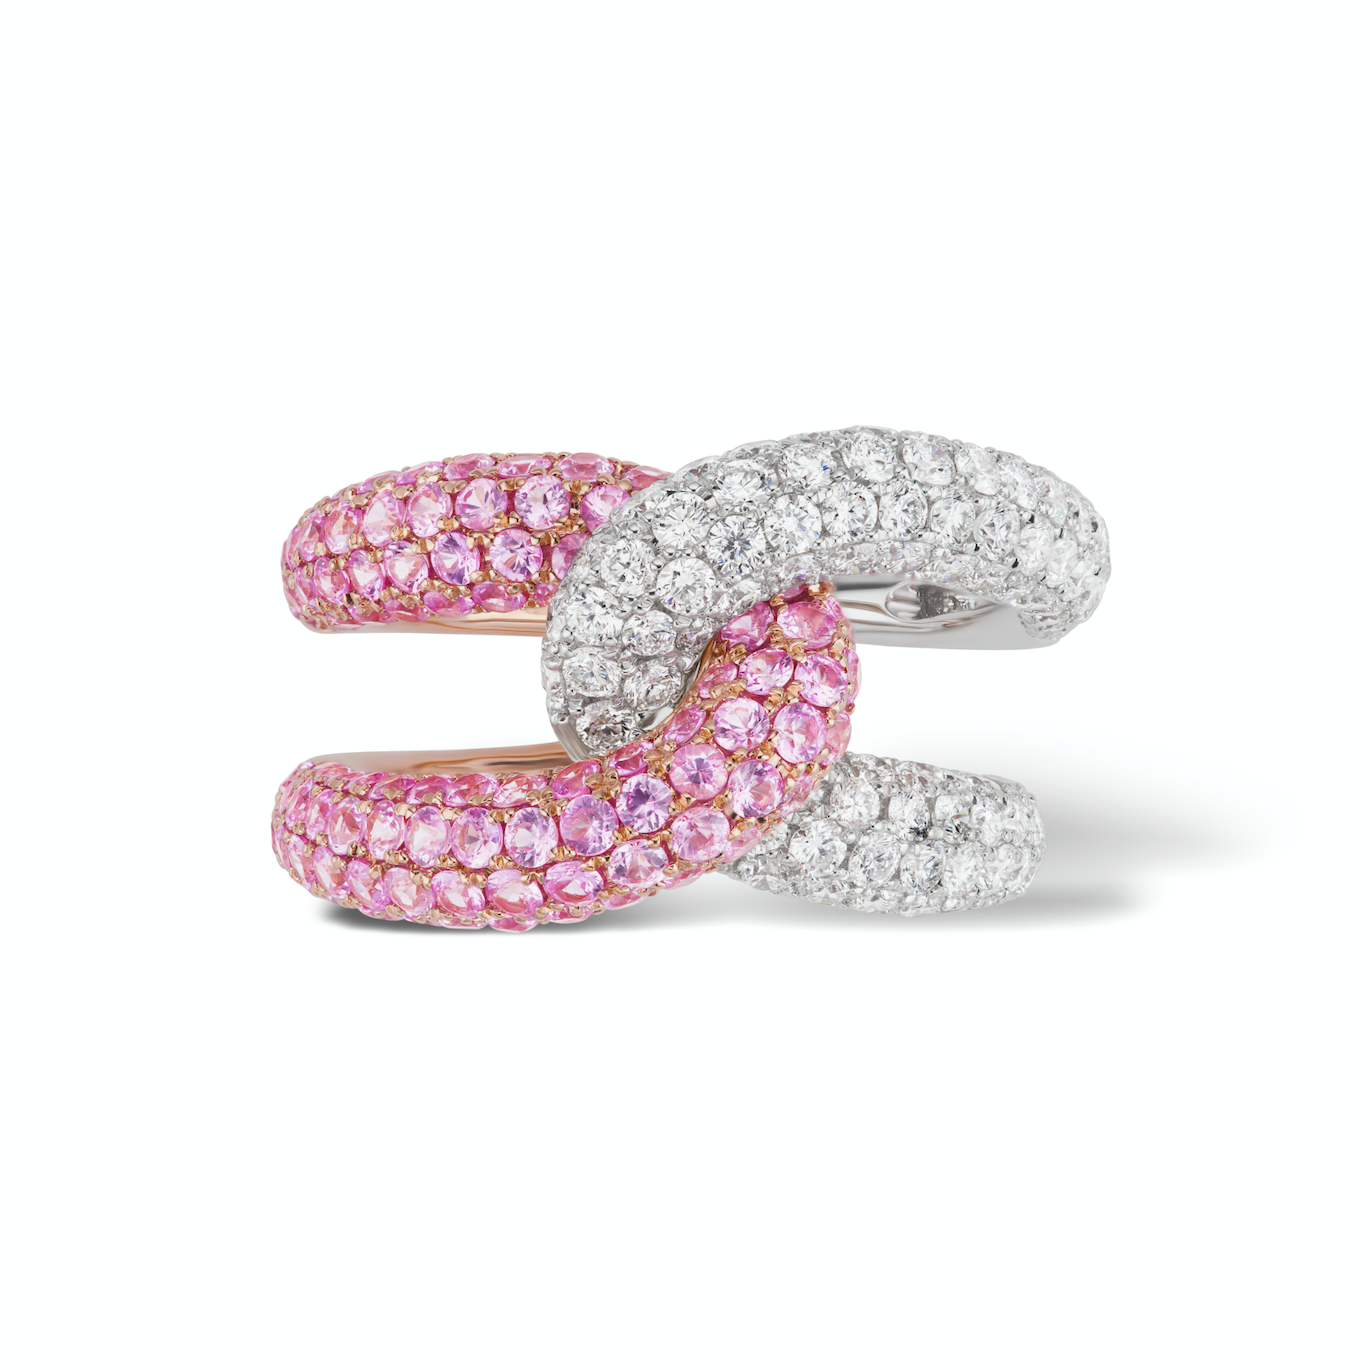 Gemstone and Diamond Intertwin Ring